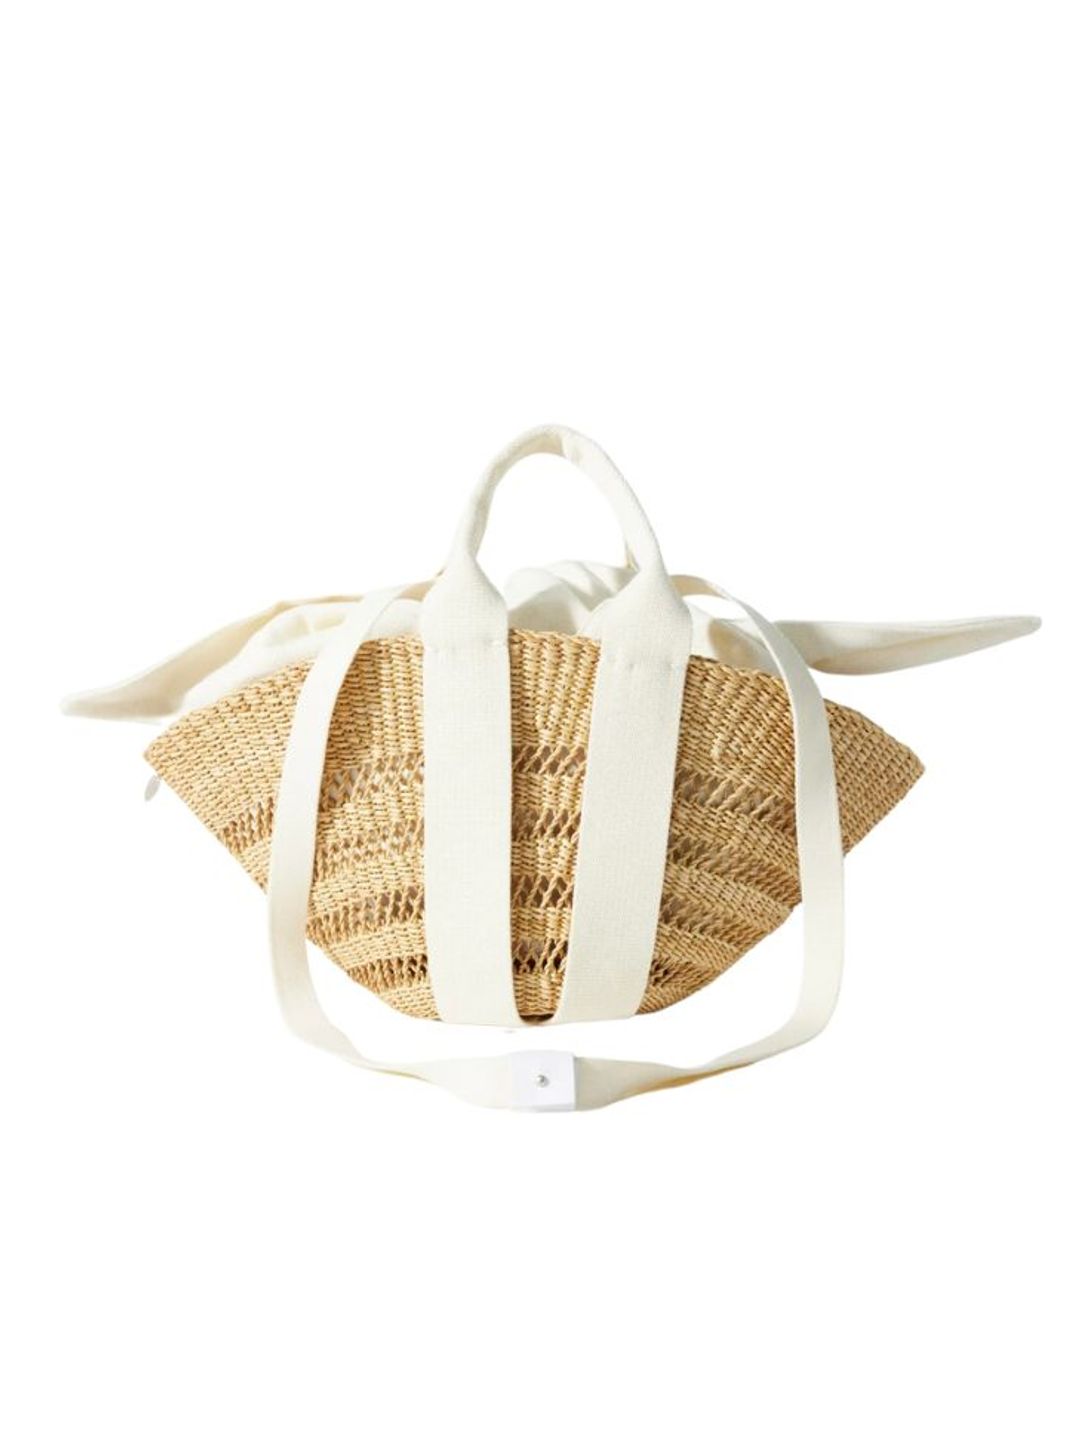 Elegant straw beach bag hanoi For Stylish And Trendy Looks 